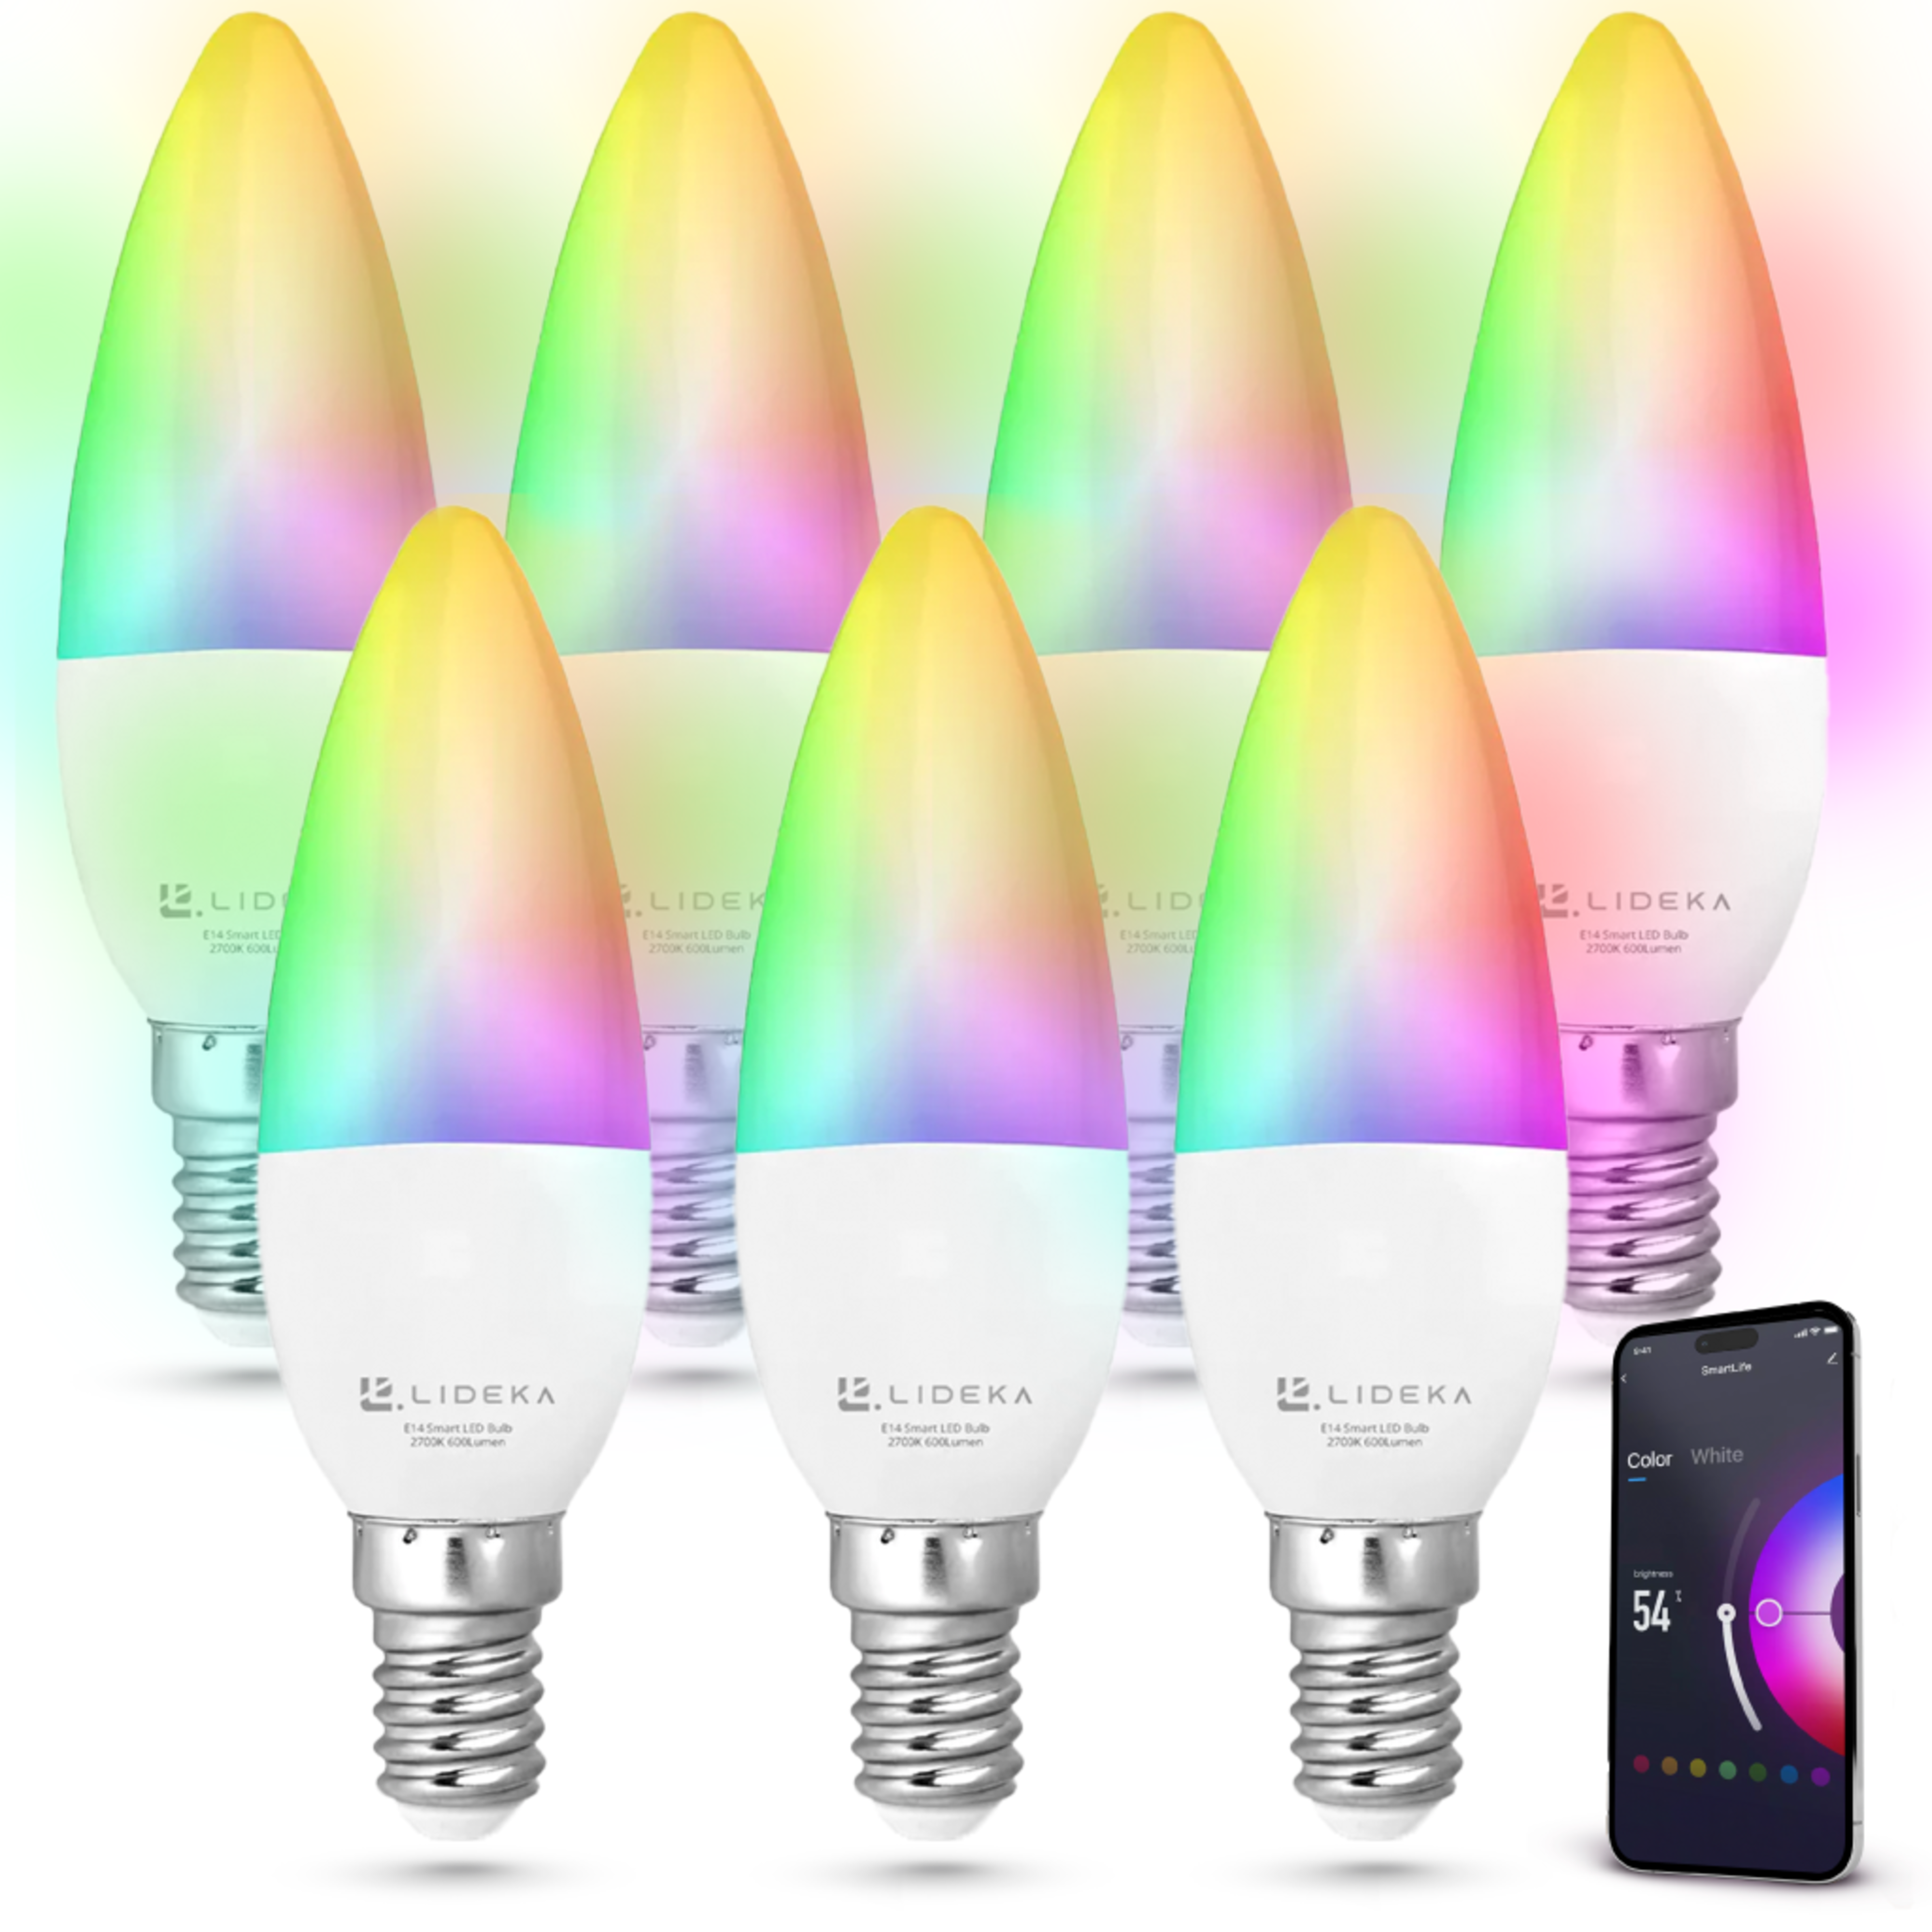 E14 Watt E14 Dimmbar 600Lm 6W LIDEKA LED-Leuchtmittel LED Lampen 7er-Pack Multicolors 6